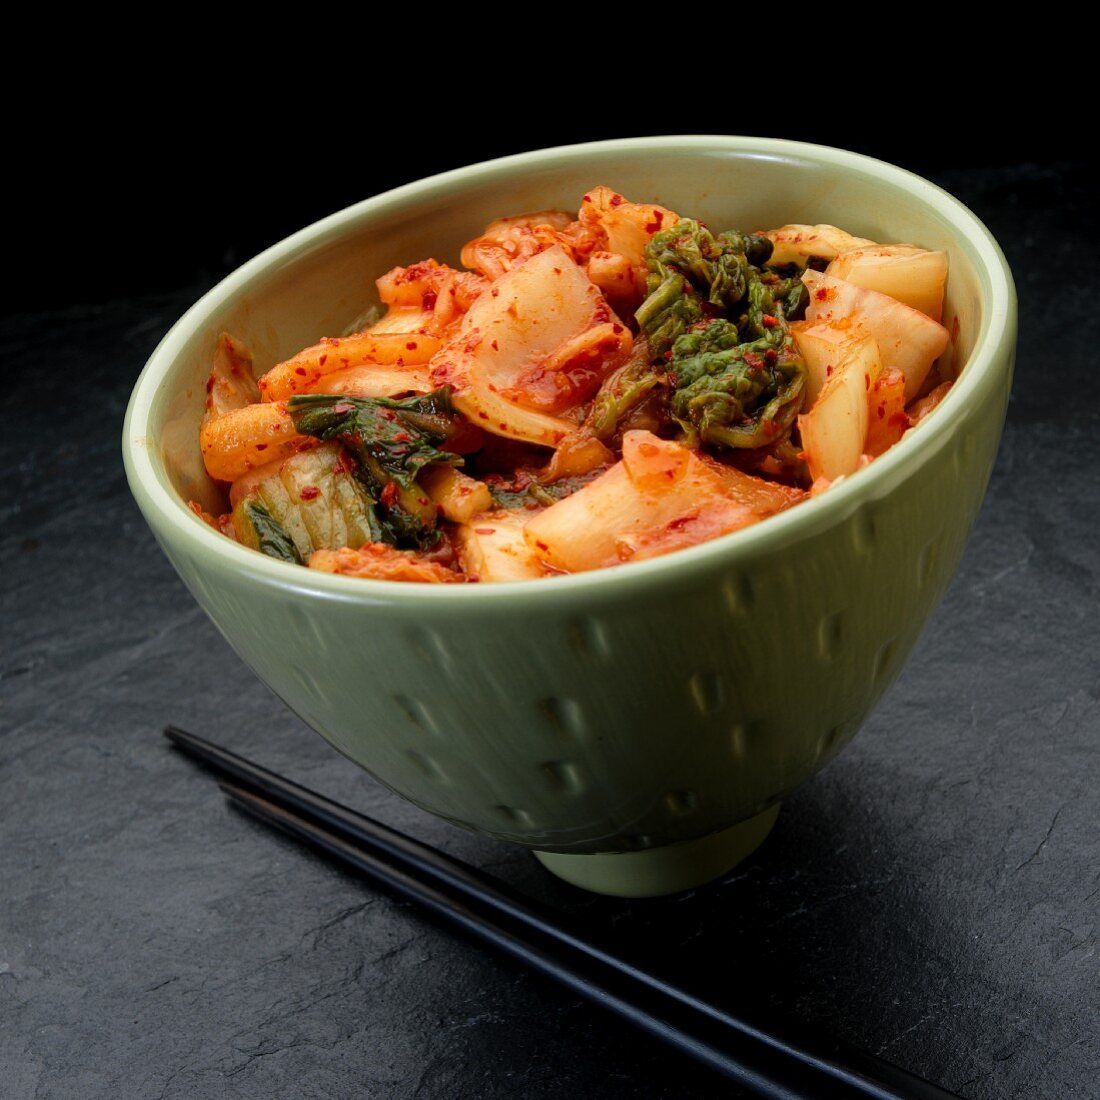 Kimchi in a bowl (Korea)